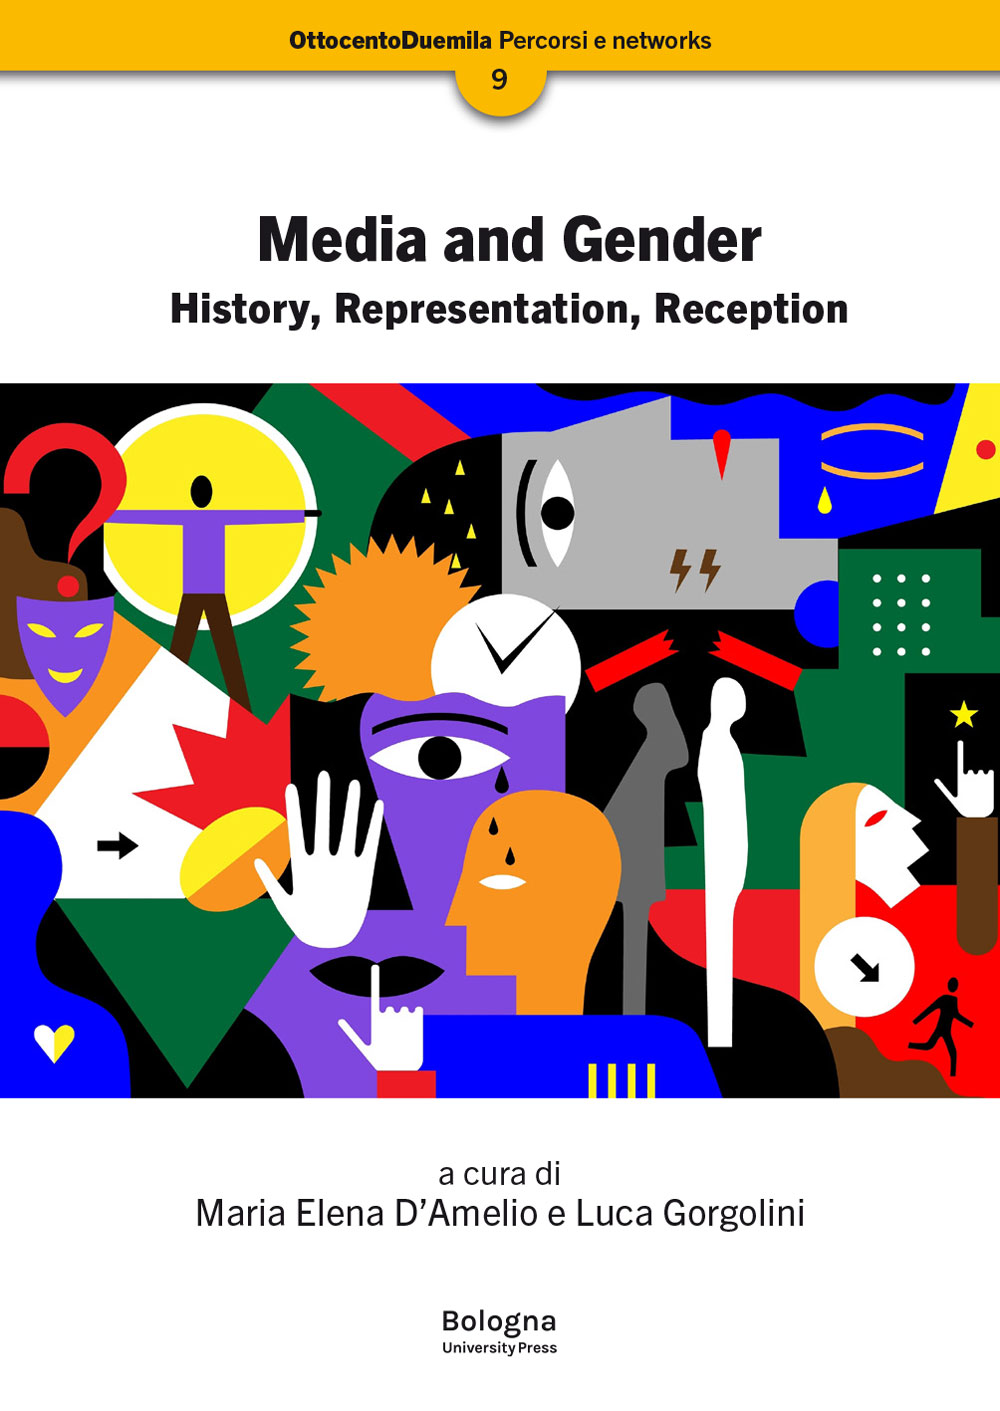 Media and Gender - Bologna University Press